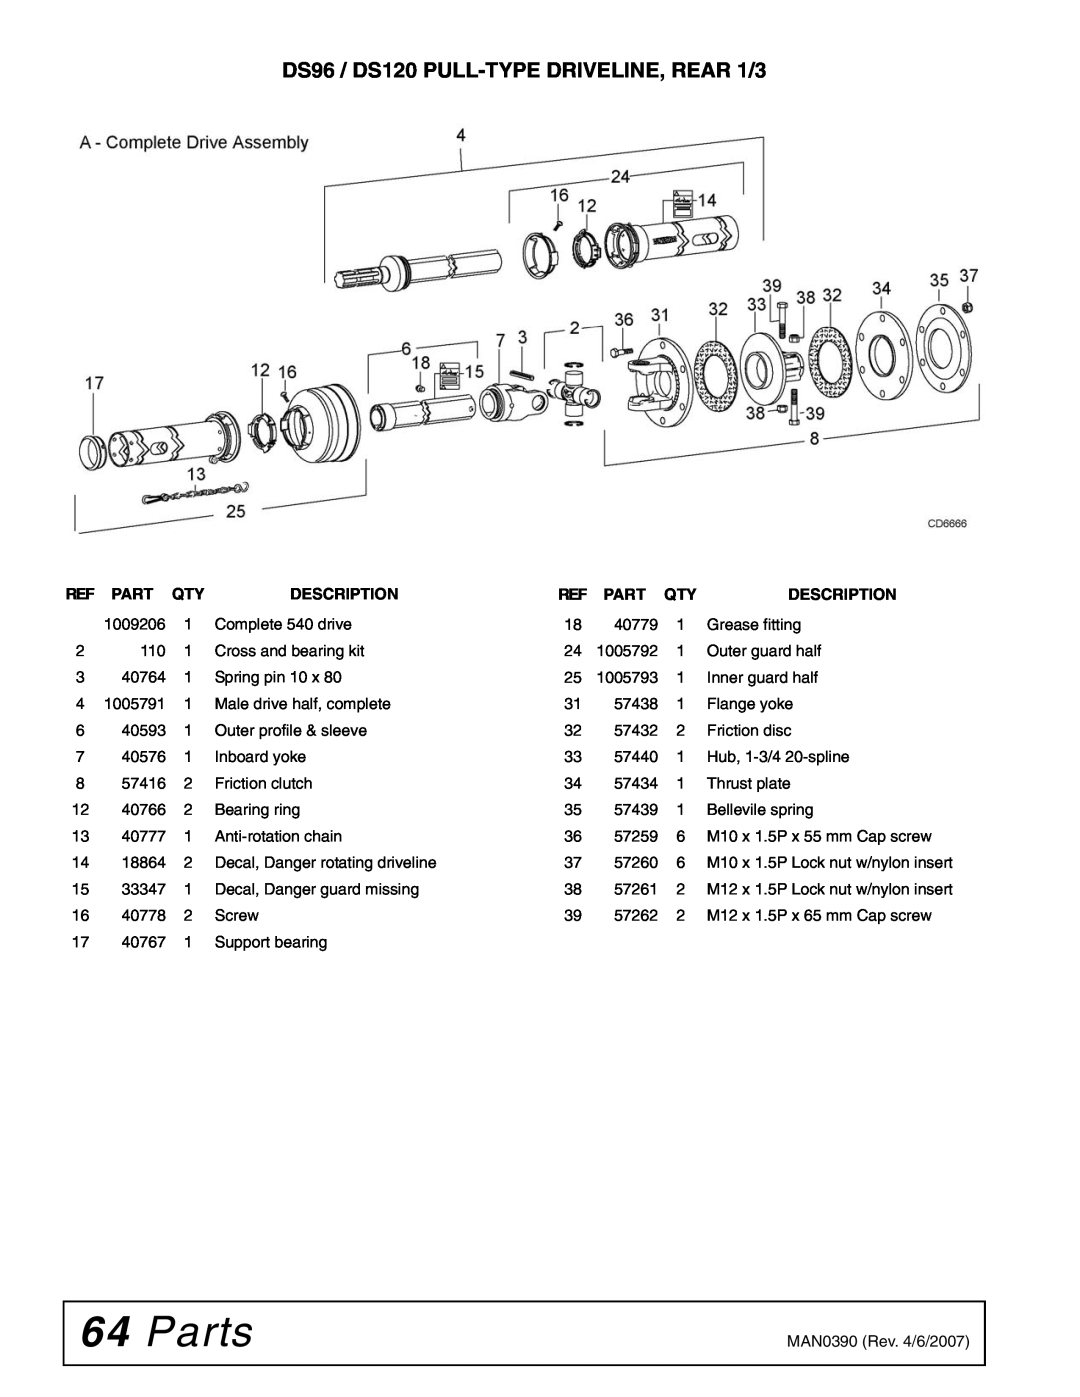 Woods Equipment manual Parts, DS96 / DS120 PULL-TYPE DRIVELINE, REAR 1/3, Description 